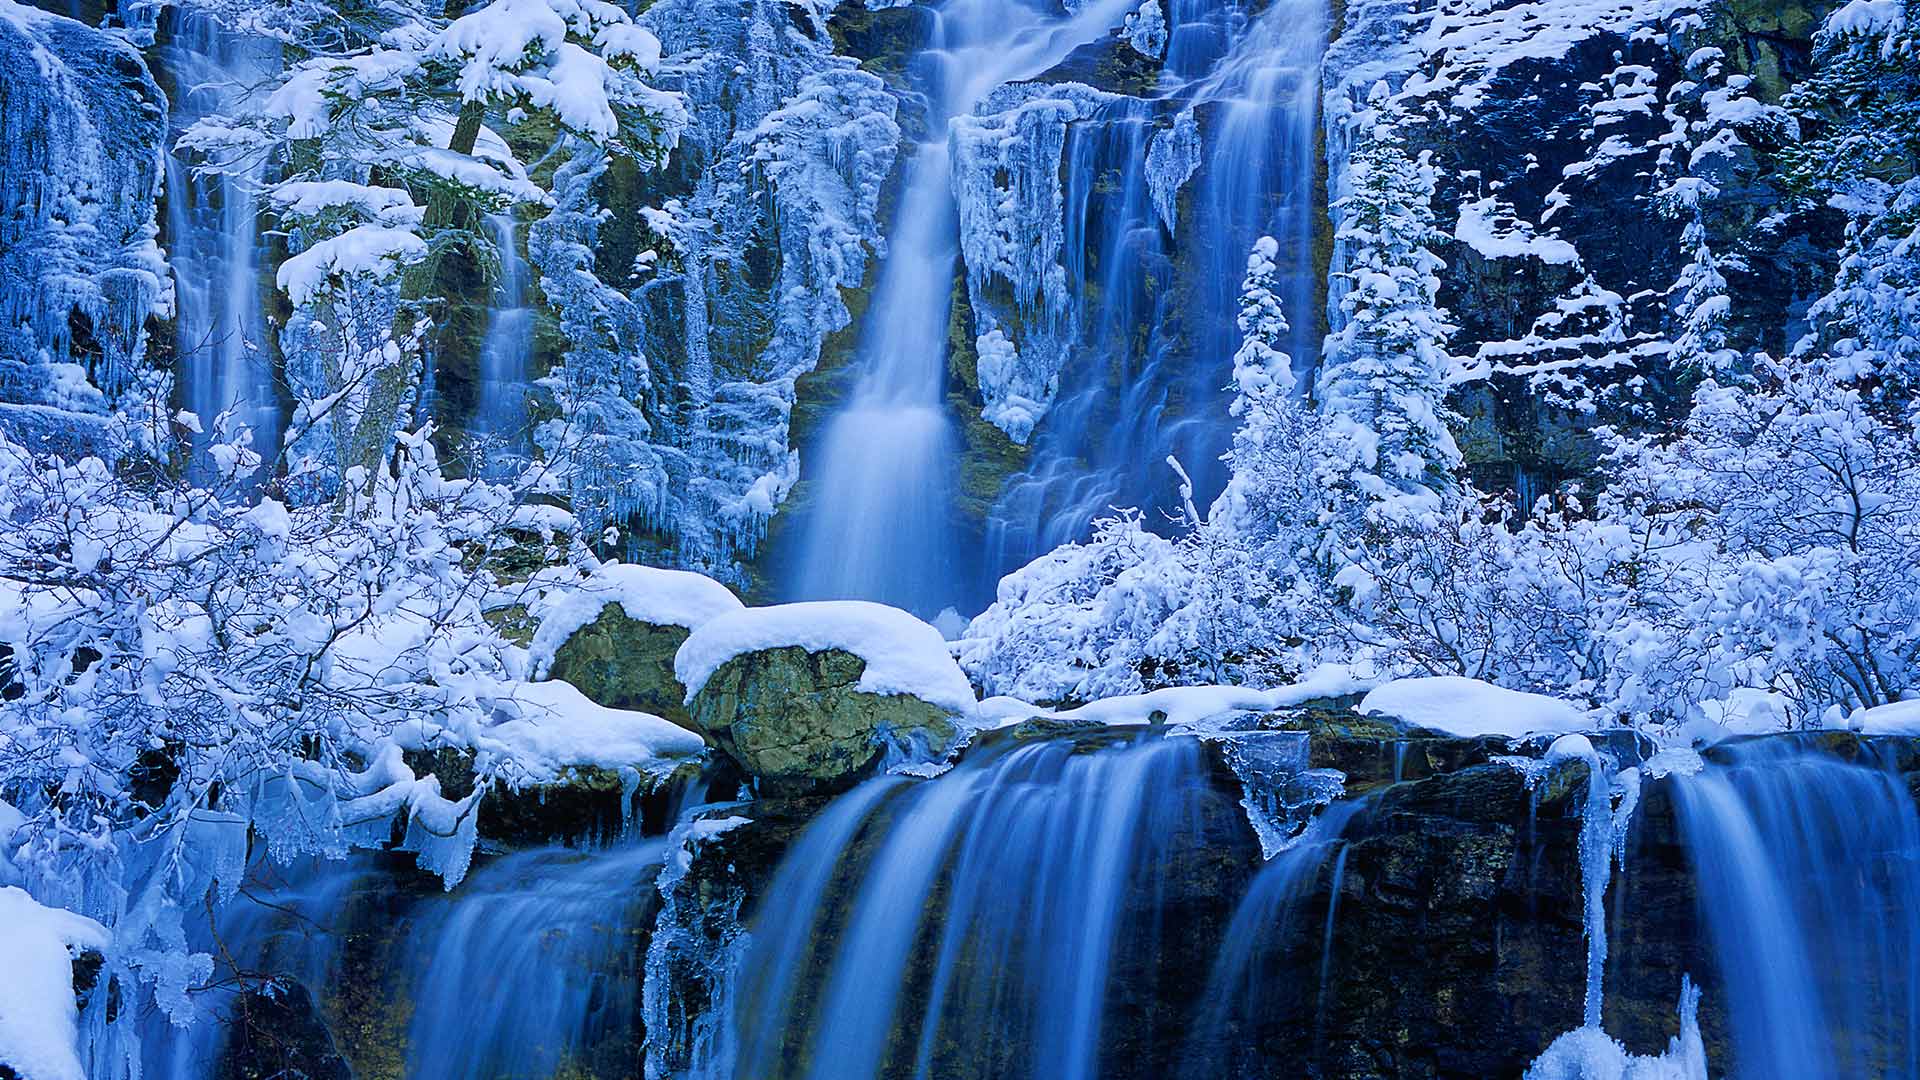 Www bing com image. Водопад Санвапта. Водопад Мосбрей. Tangle Creek Falls водопад. Замерзший водопад Фенг.